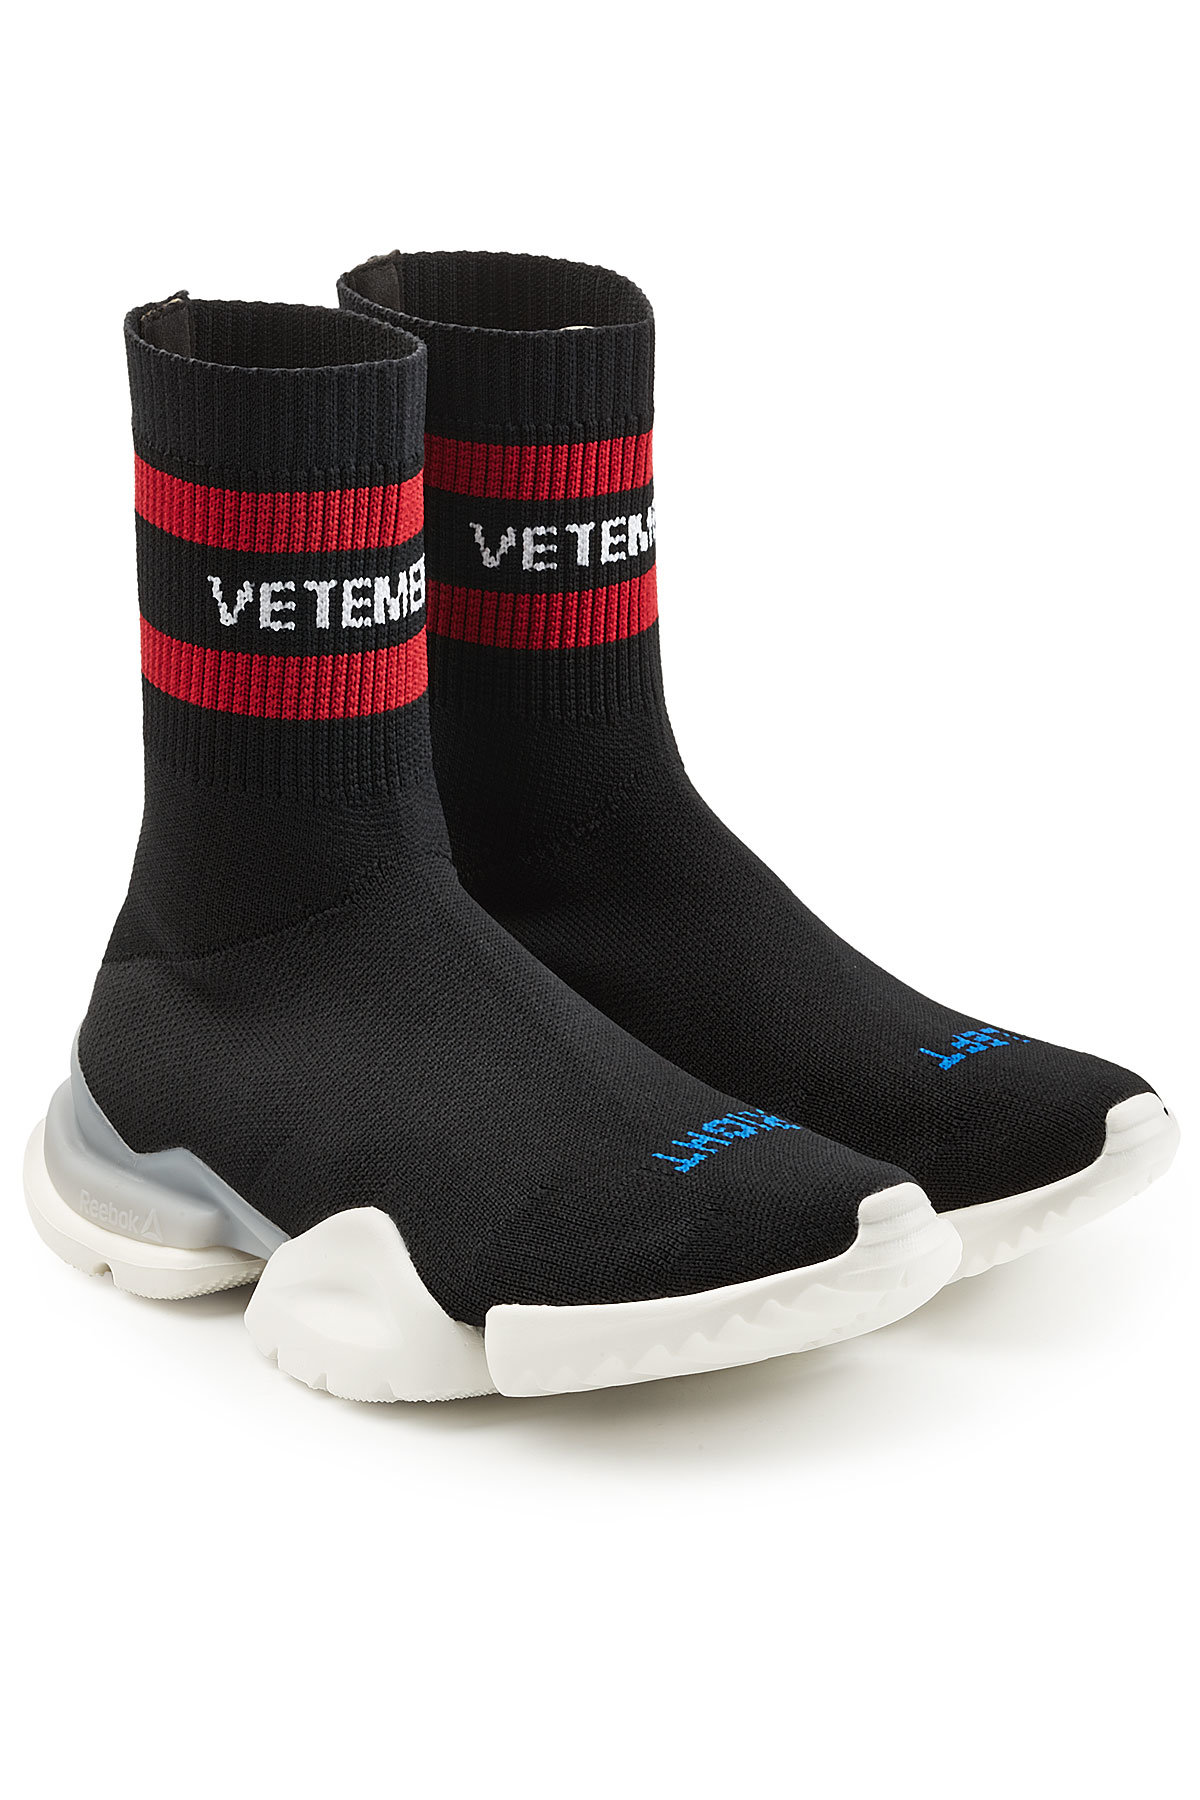 Vetements - x Reebok Sock Sneakers